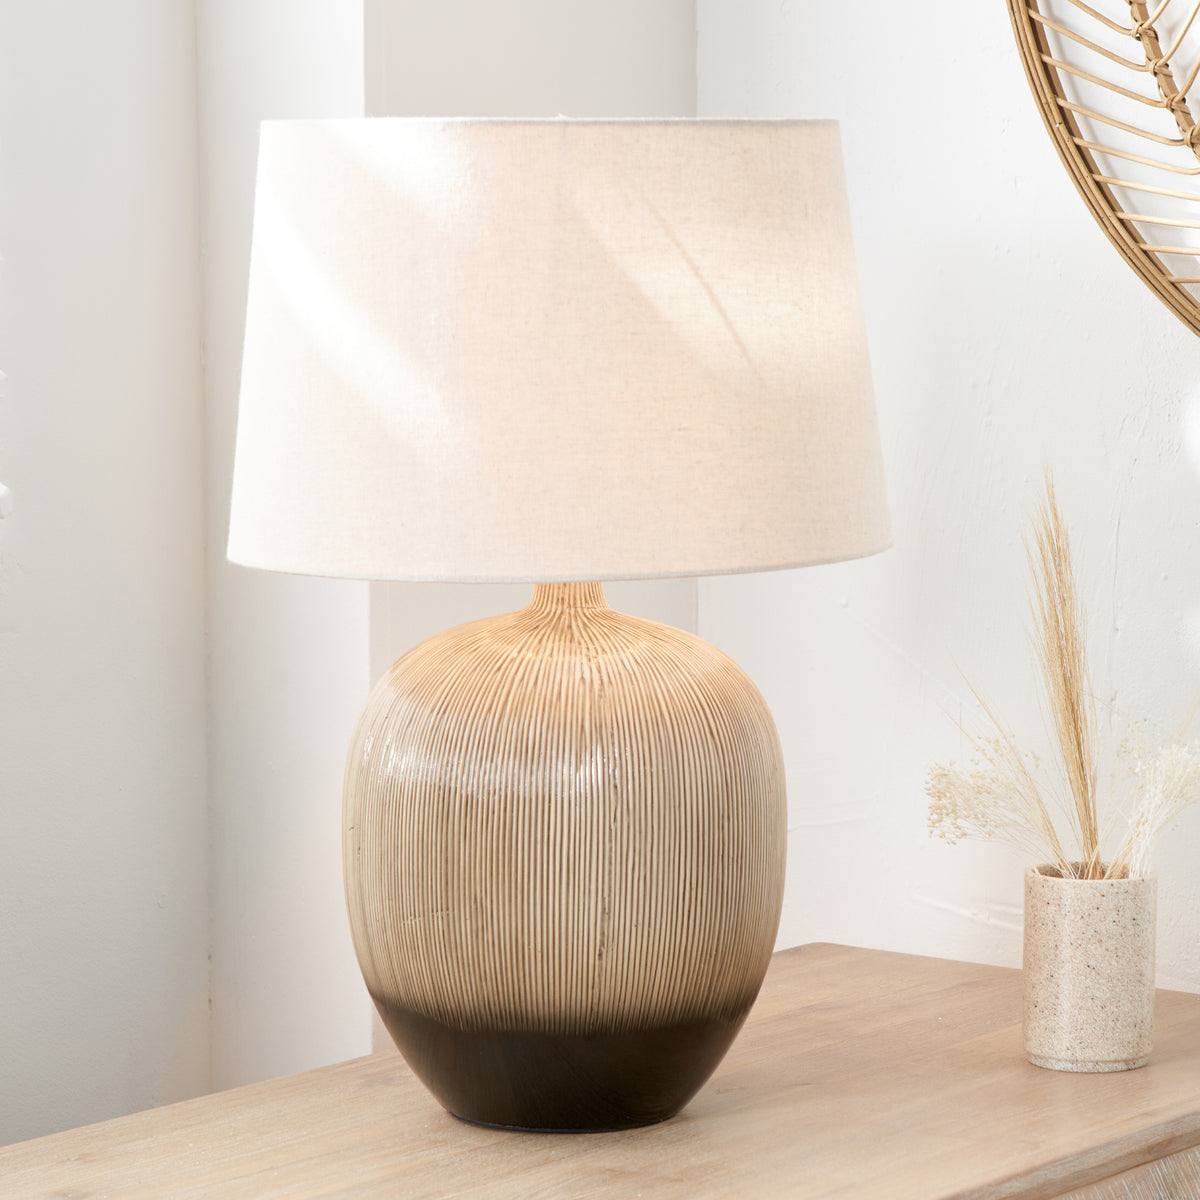 Greta Black Textured Ceramic Table Lamp for living room or bedroom